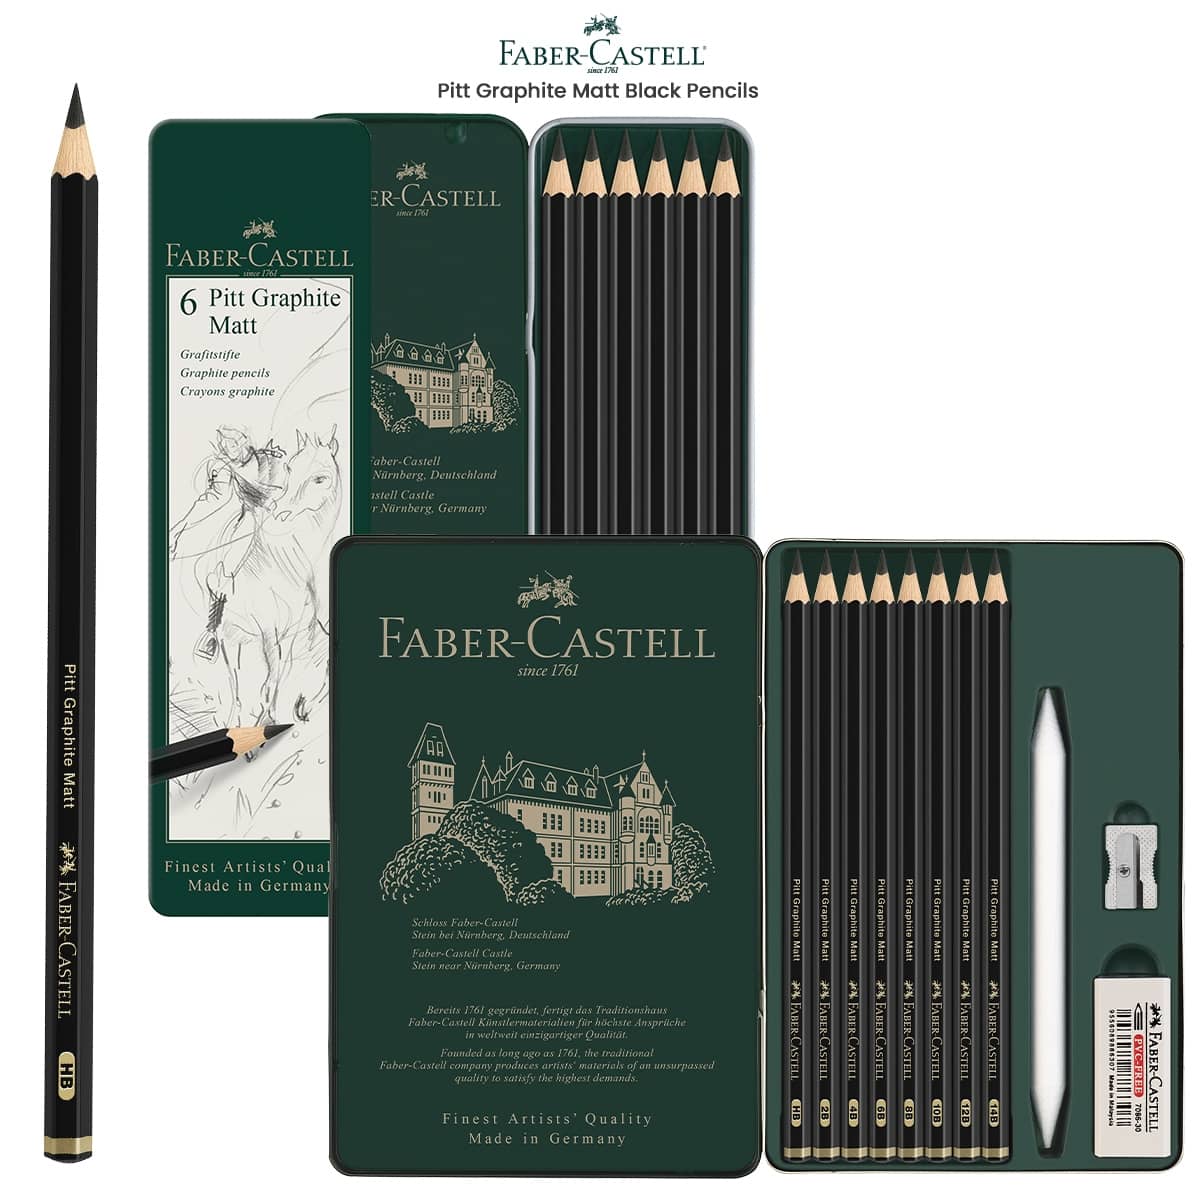 HOTCOLOR Drawing Pencils Set, 36pcs Art Supplies Set Sketching Pencil Set  with Graphite Pencils,Dual Ended Color Pencils,Charcoal Pencils Set for